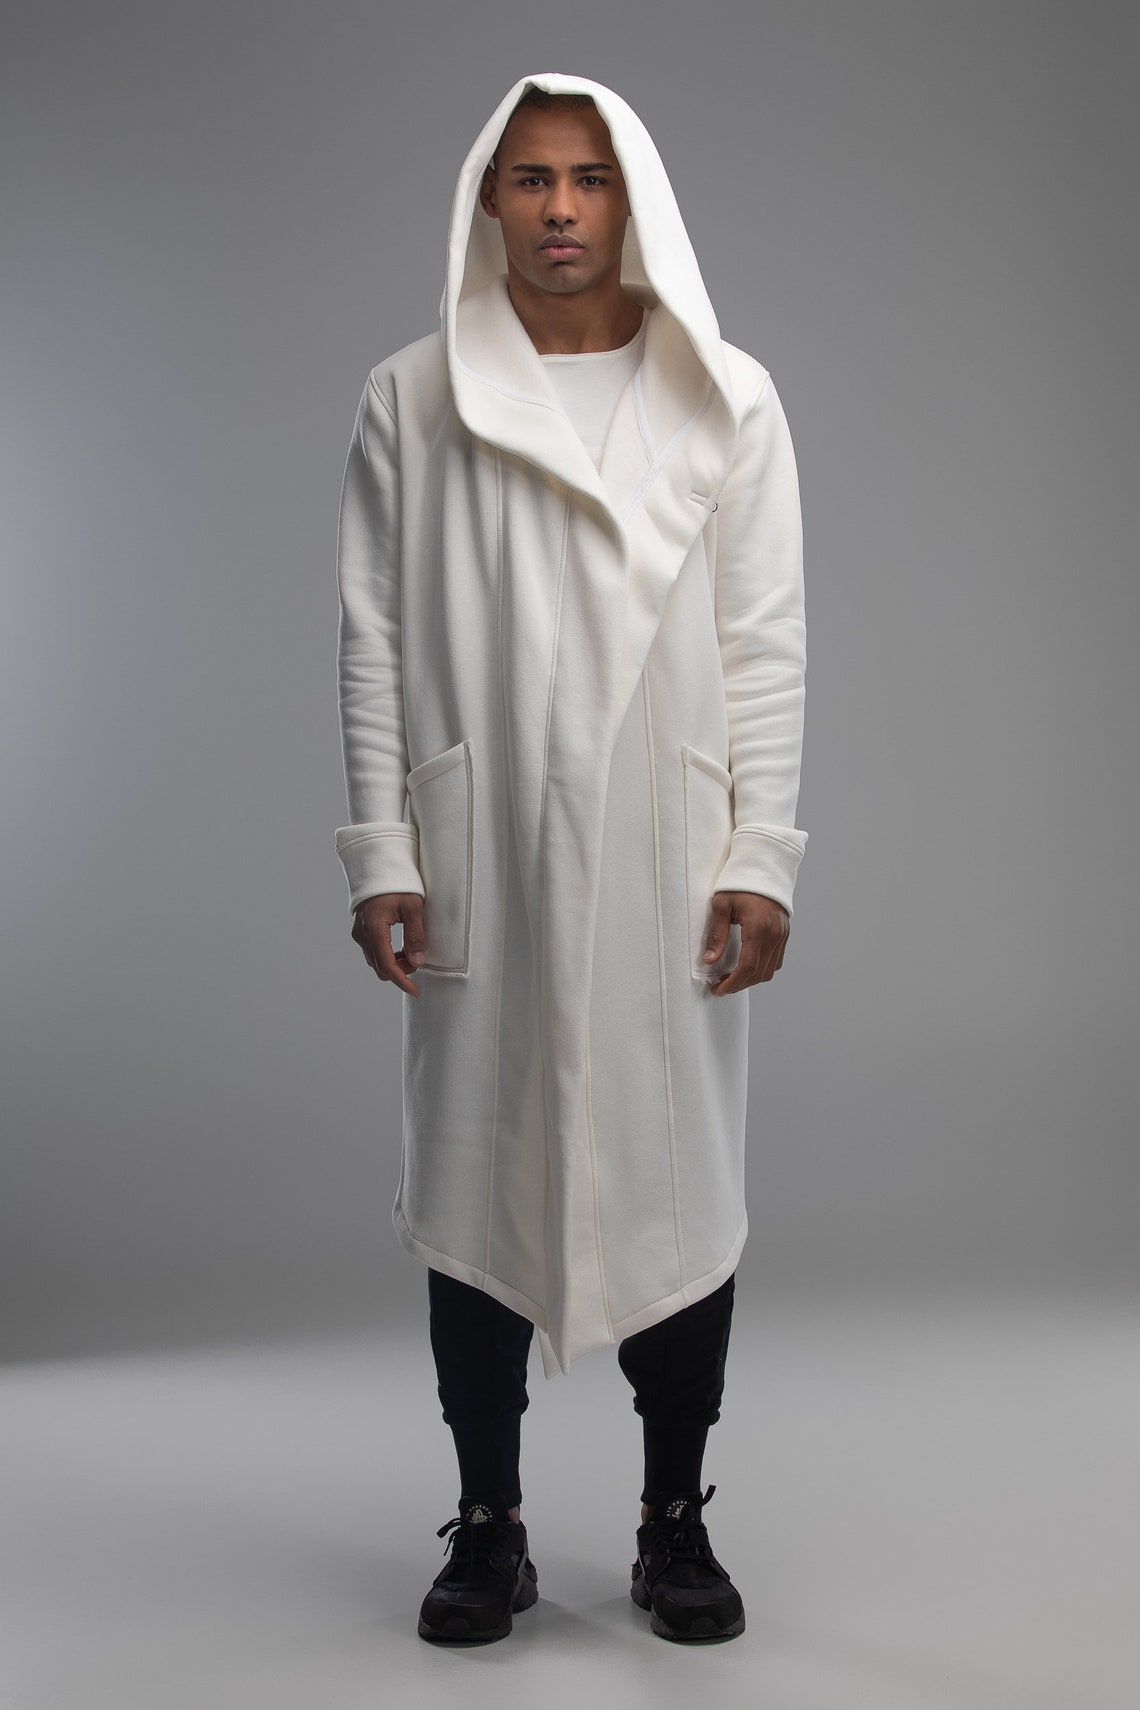 Geometric hooded coat men white futuristic jacket long | Etsy